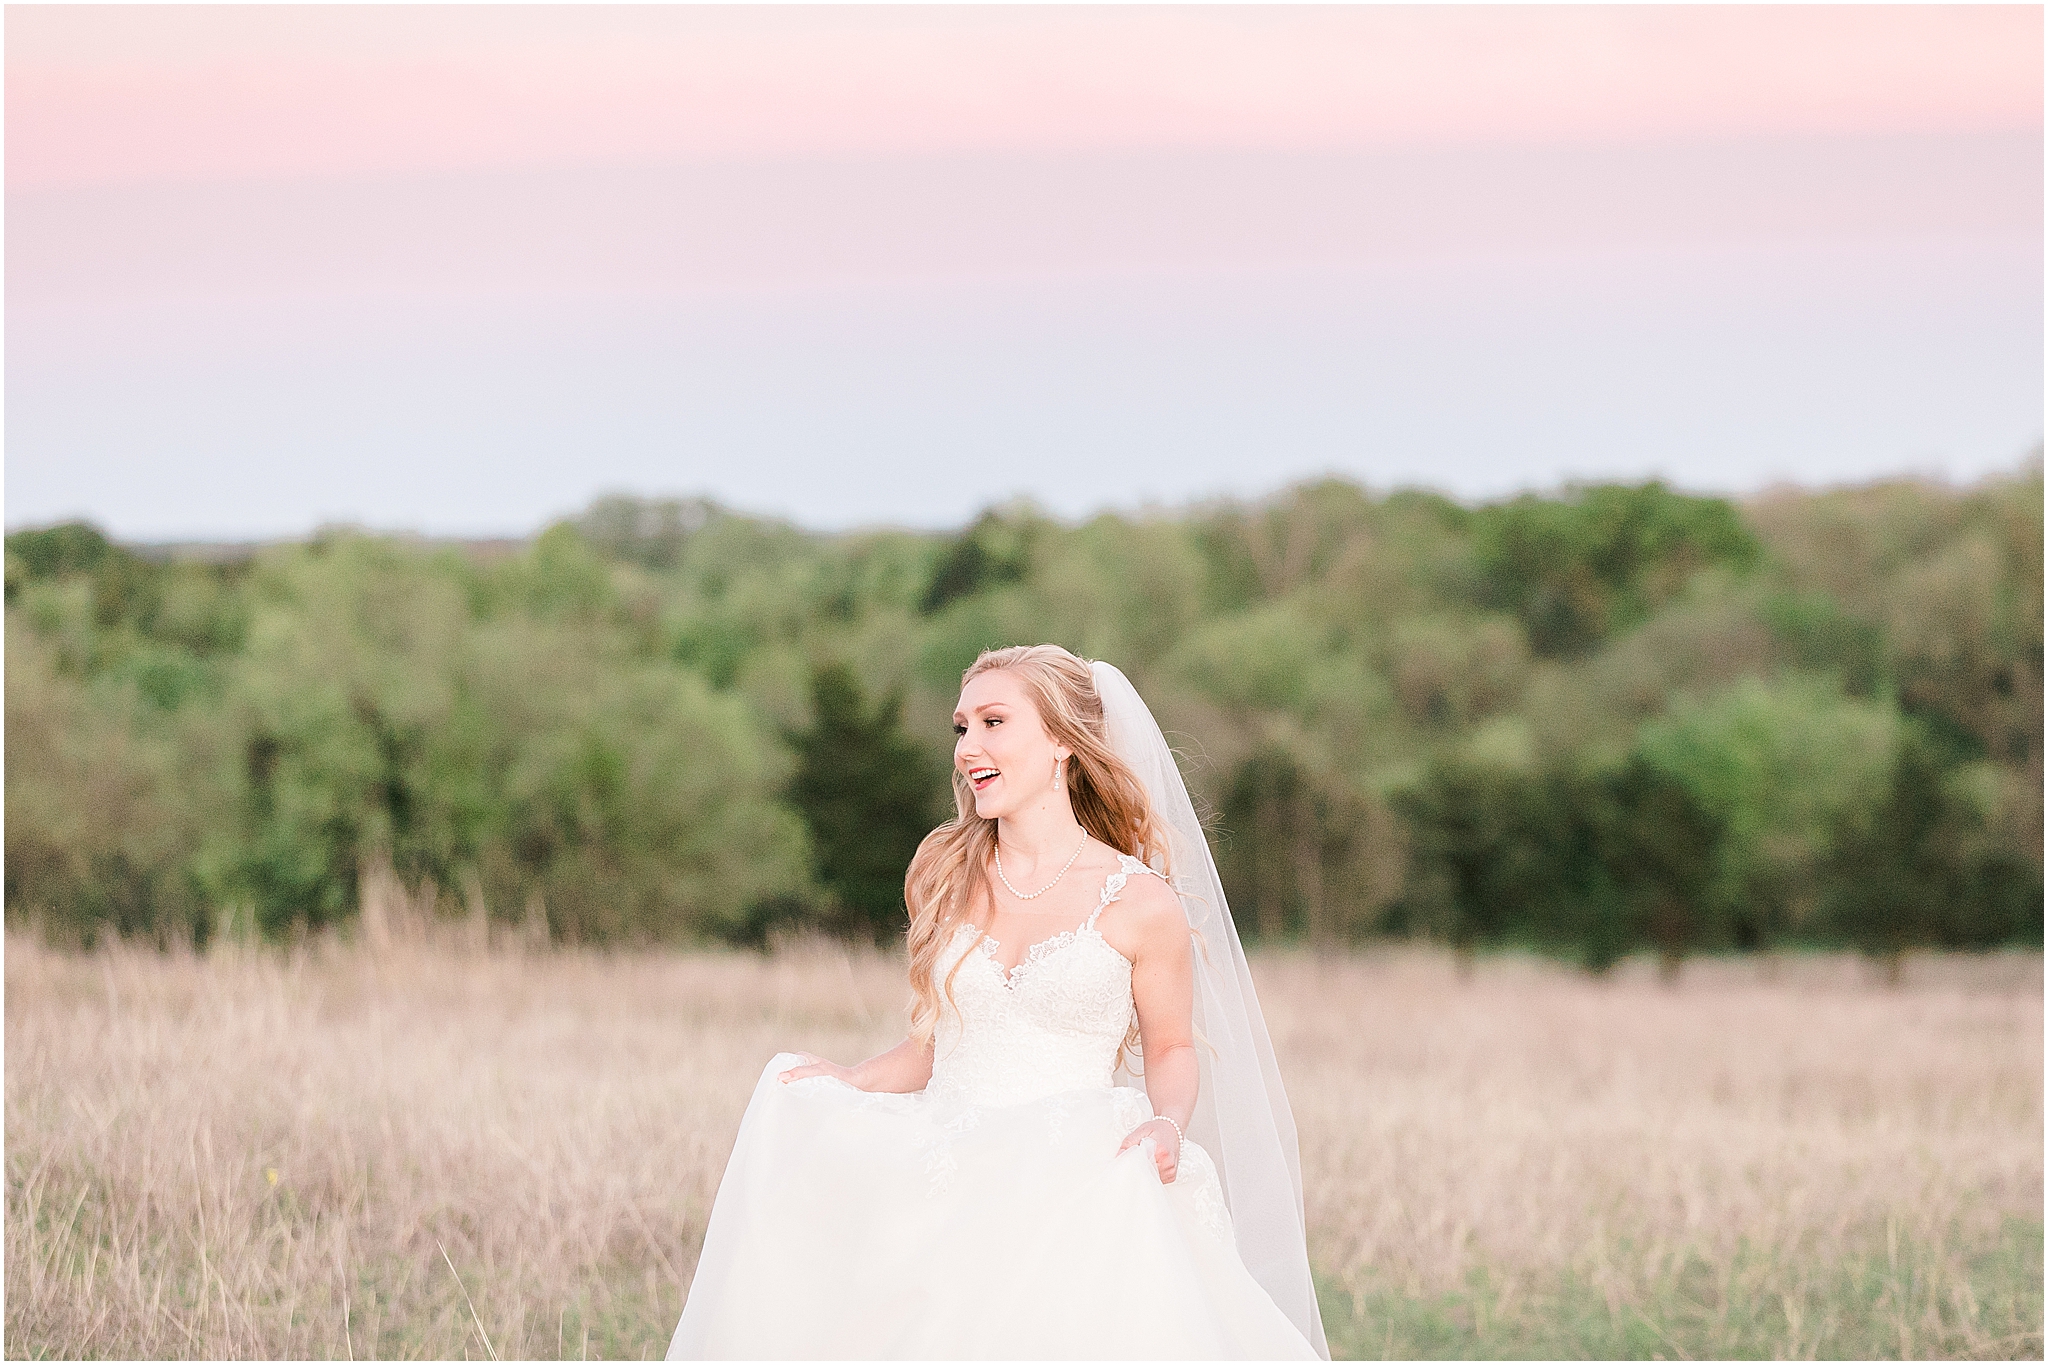 Bridal Session Ideas by Dallas Wedding Photographer Jillian Hogan Photography